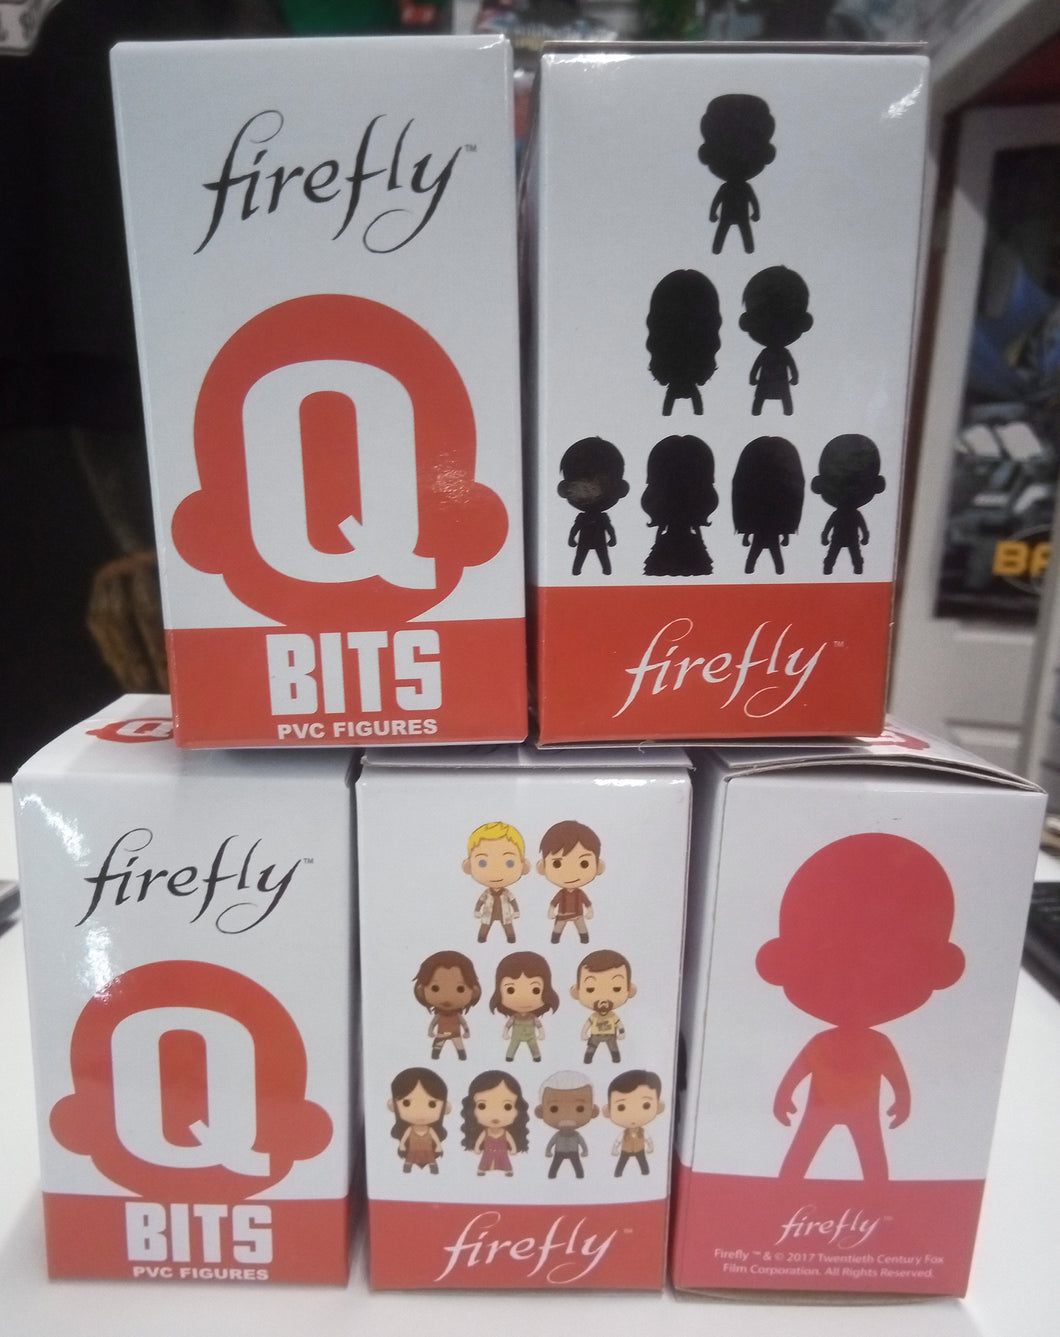 Firefly Q Bits blind box figures